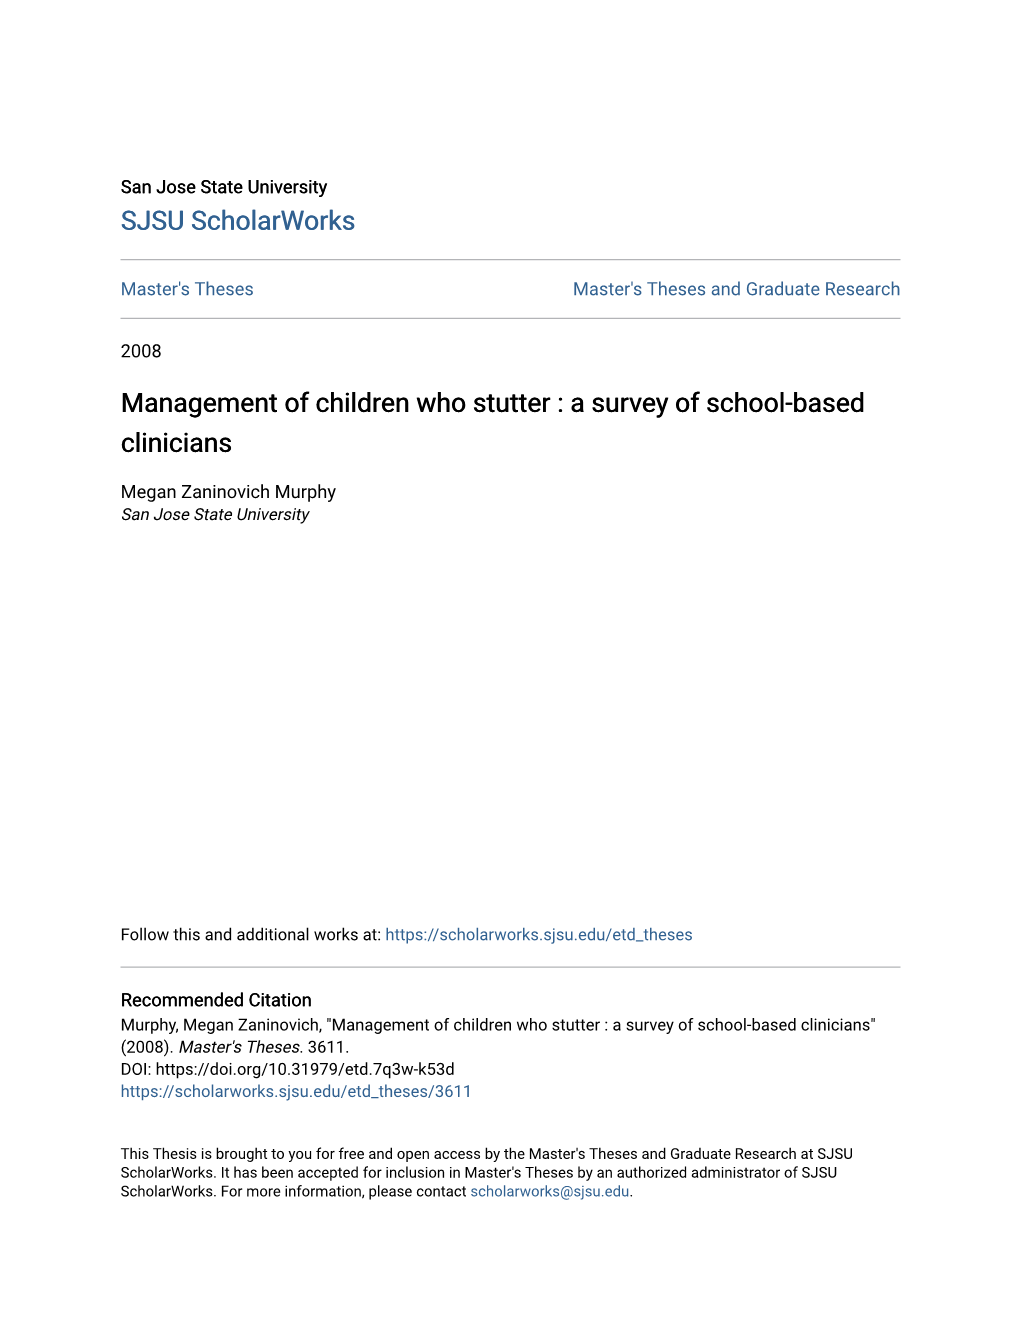 Management of Children Who Stutter : a Survey of School-Based Clinicians